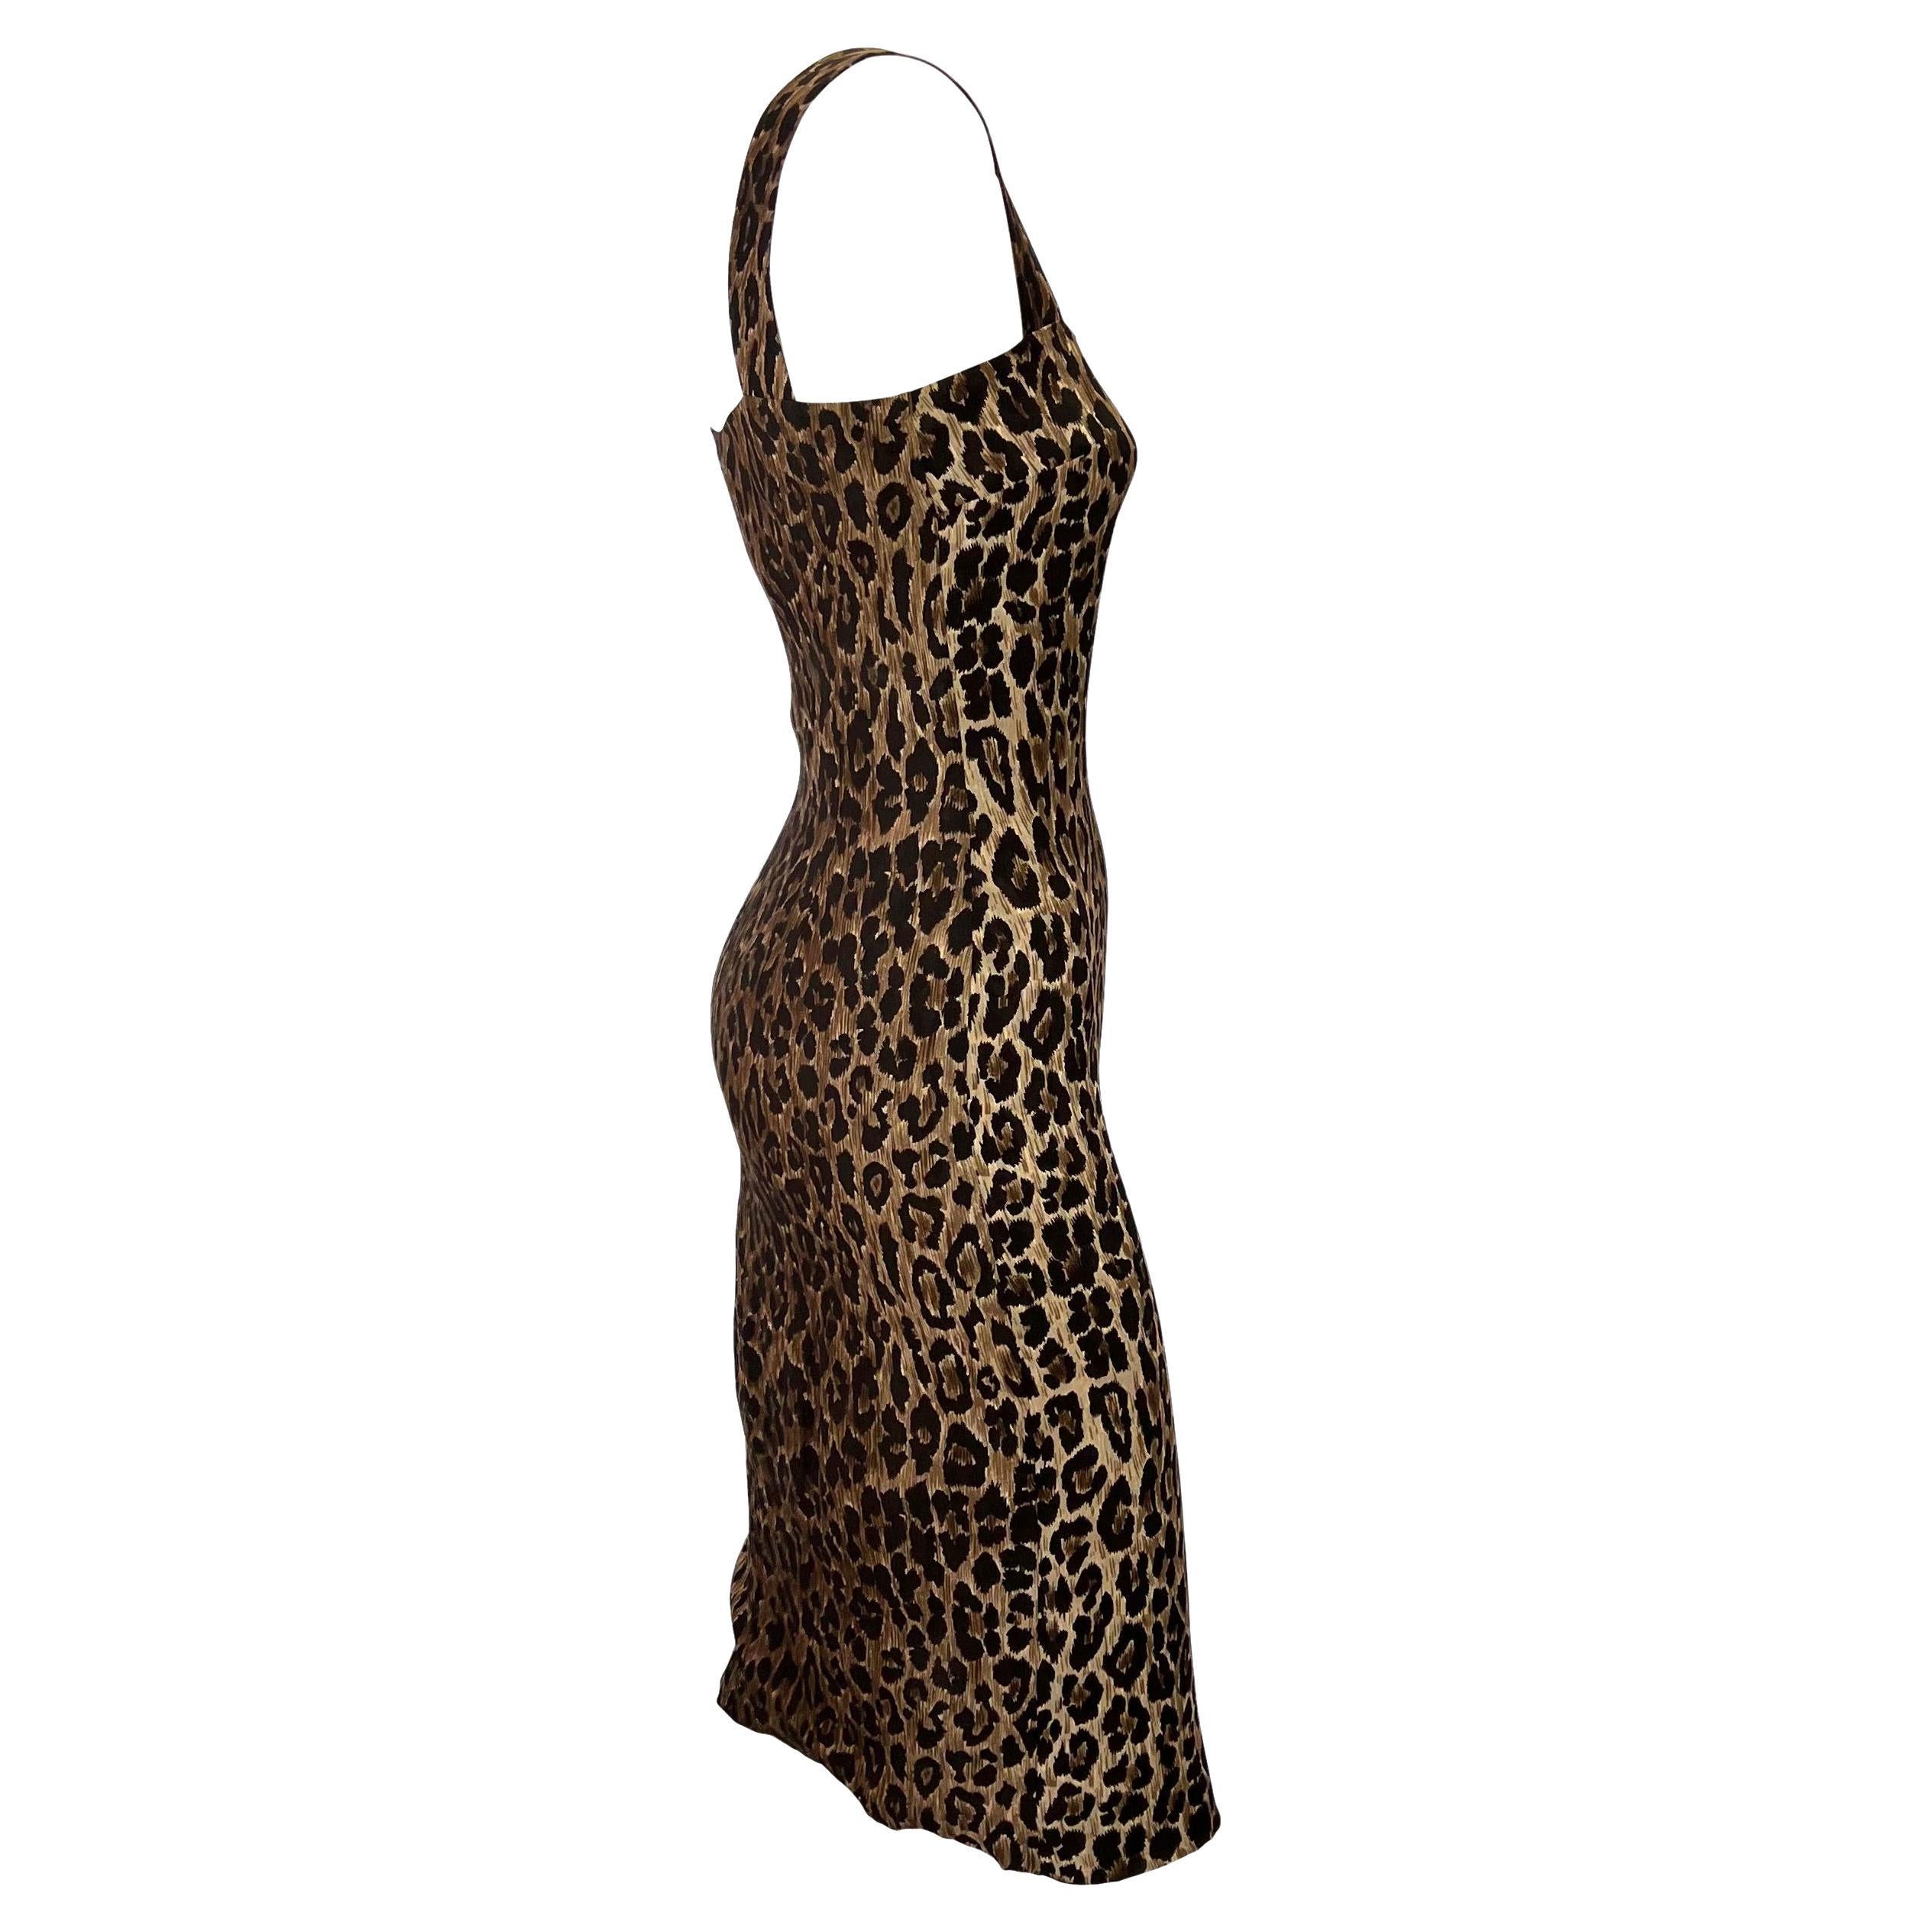 Women's S/S 1997 Dolce & Gabbana Cheetah Print Silk Sleeveless Bodycon Pin-Up Dress For Sale